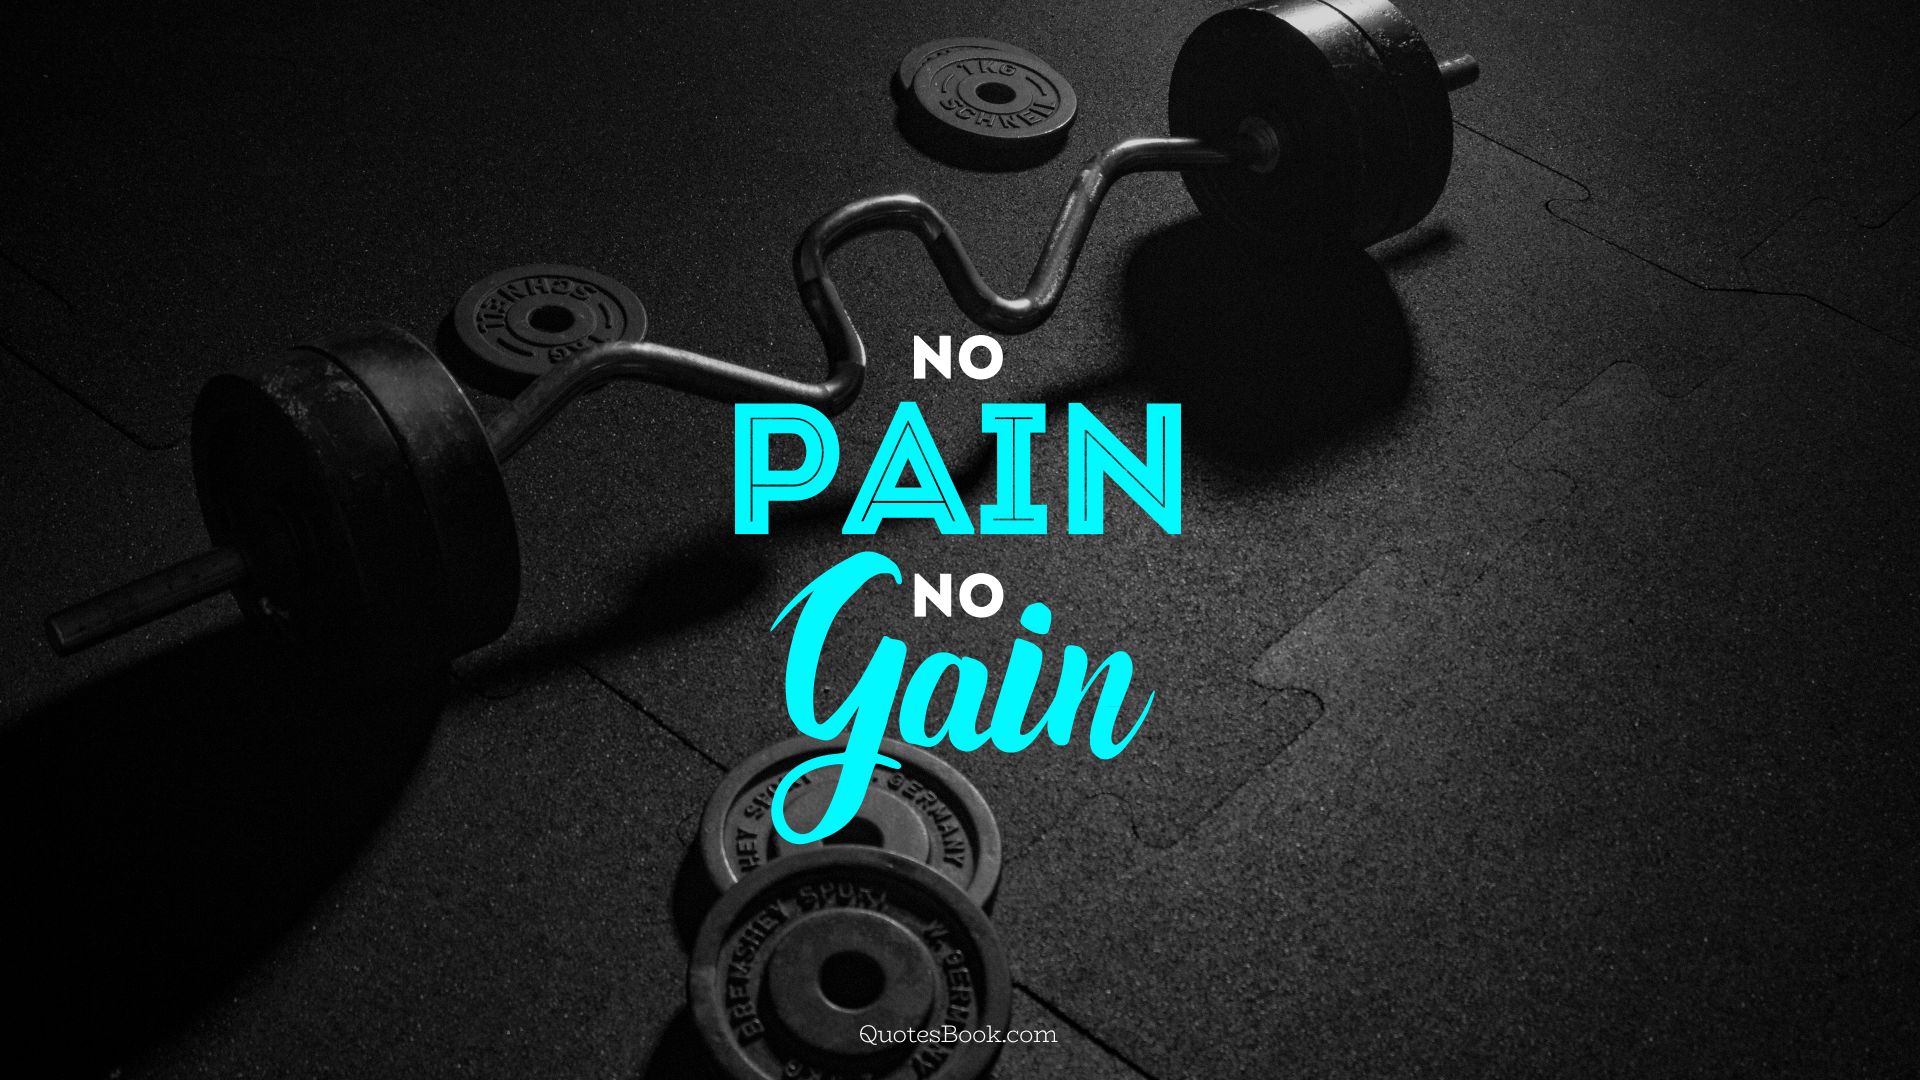 Gym No Pain No Gain Wallpaper Hd - 1920x1080 Wallpaper 